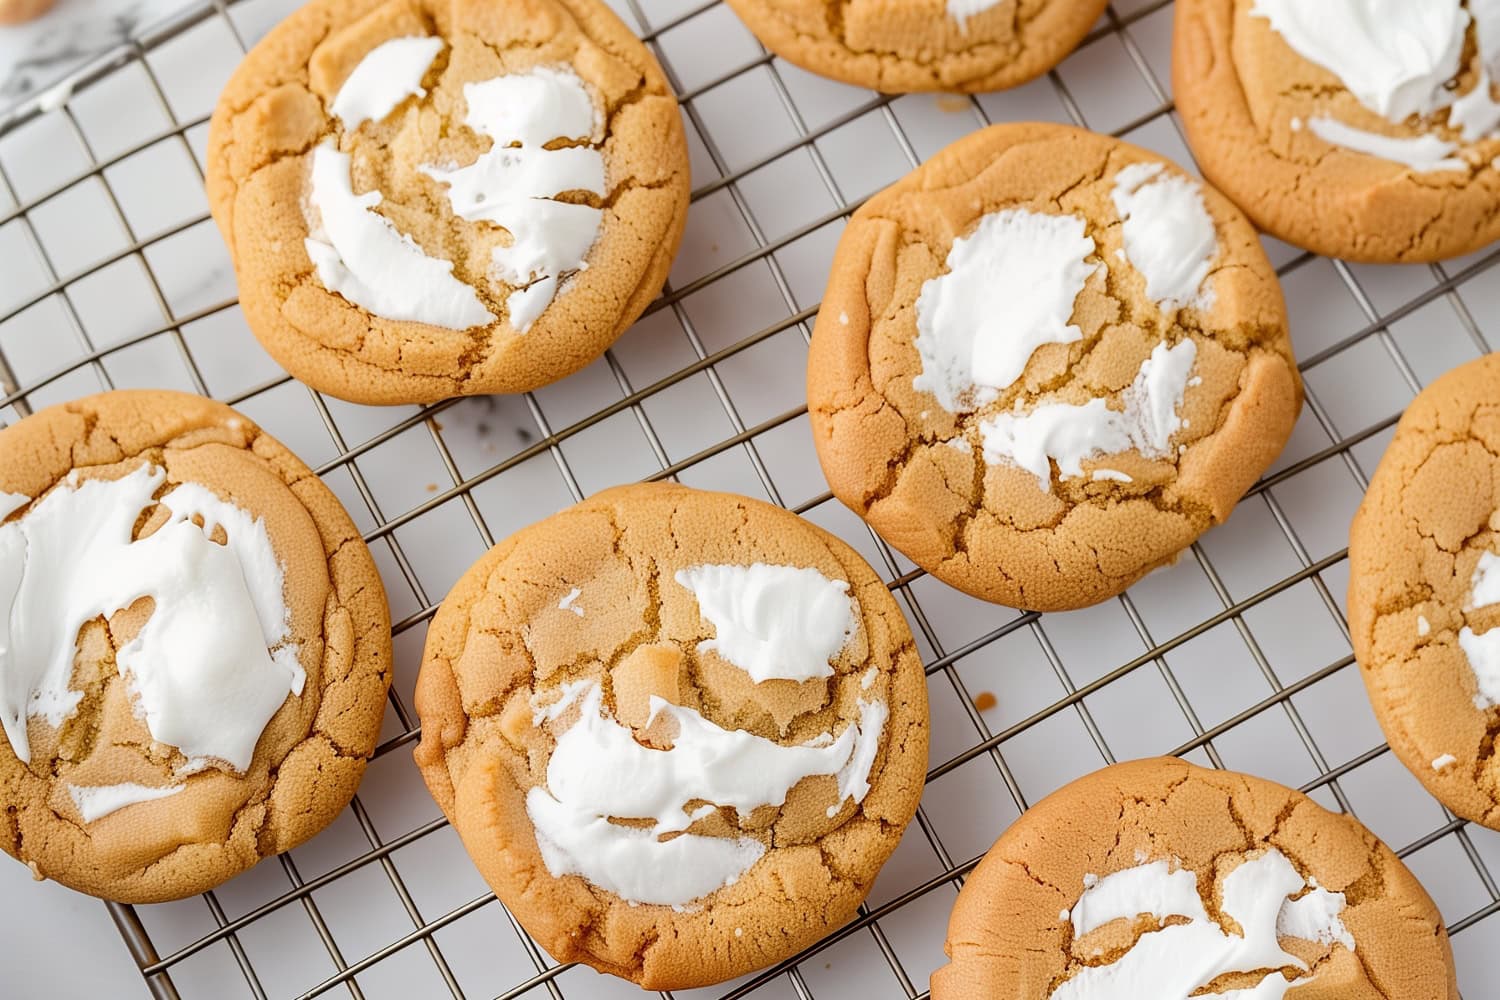 Homemade fluffernutter cookies, showcasing a perfect blend of peanut butter and marshmallow flavors.